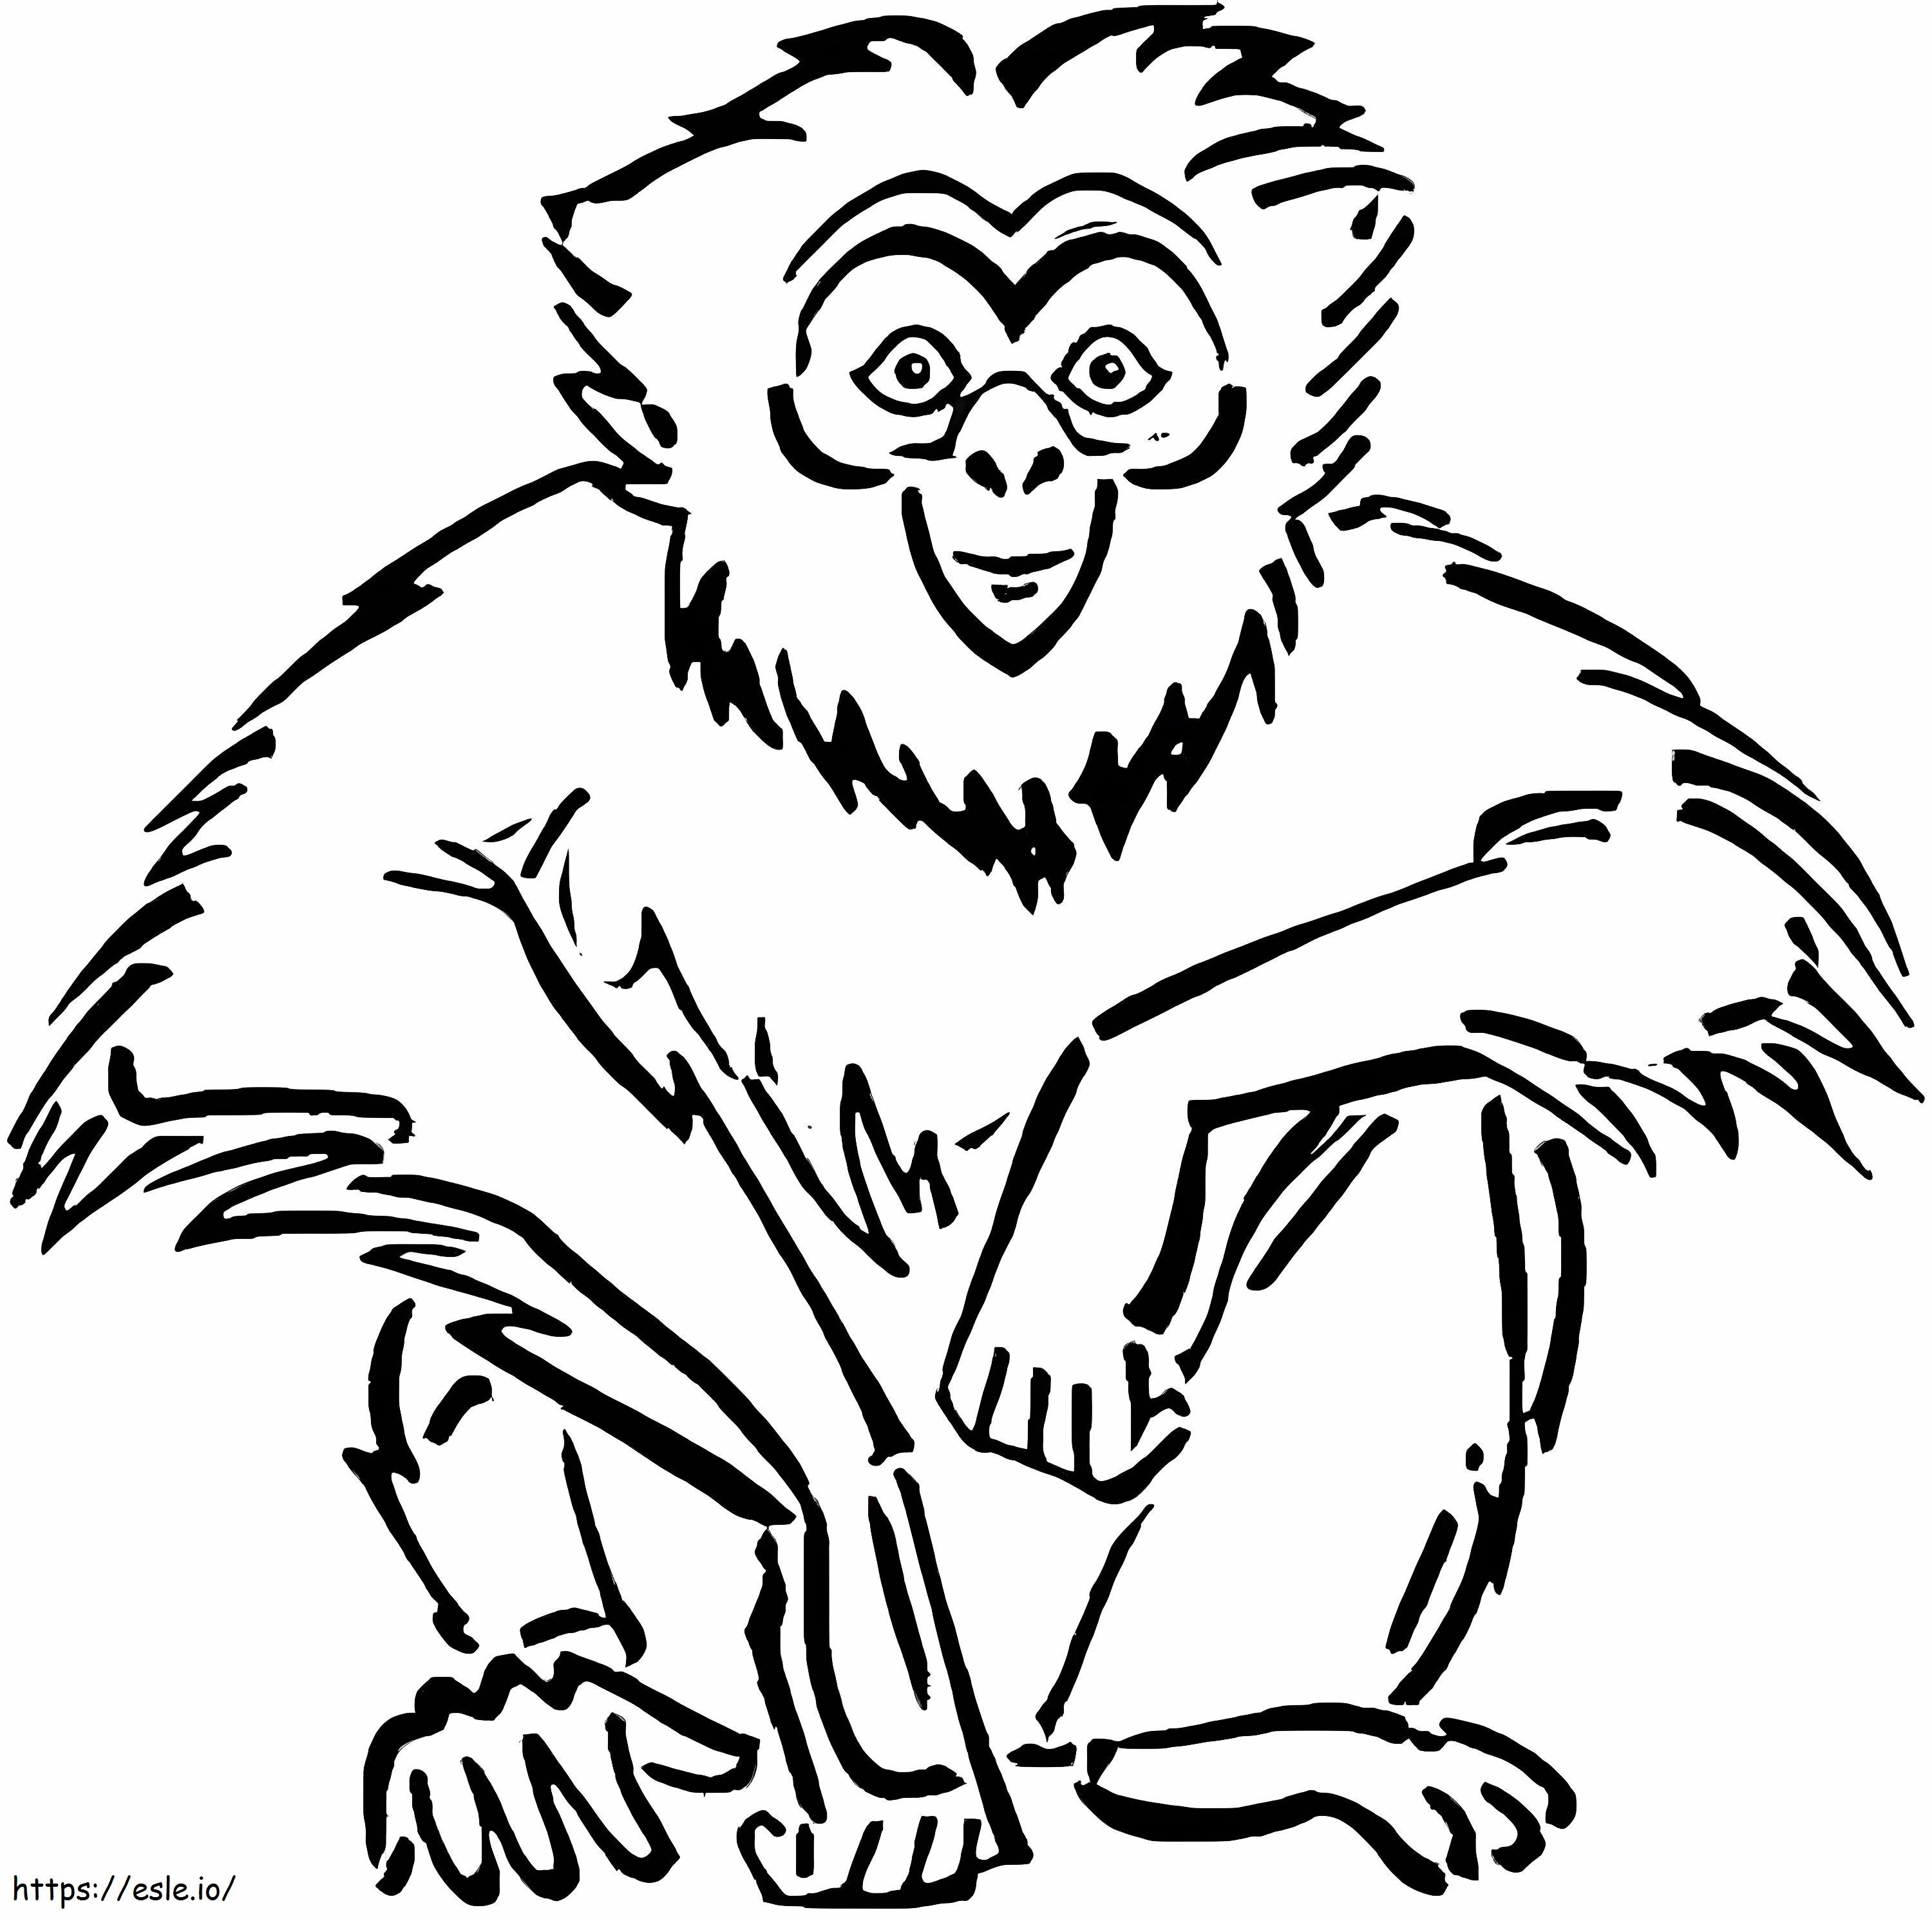 Desenhando Macaco para colorir